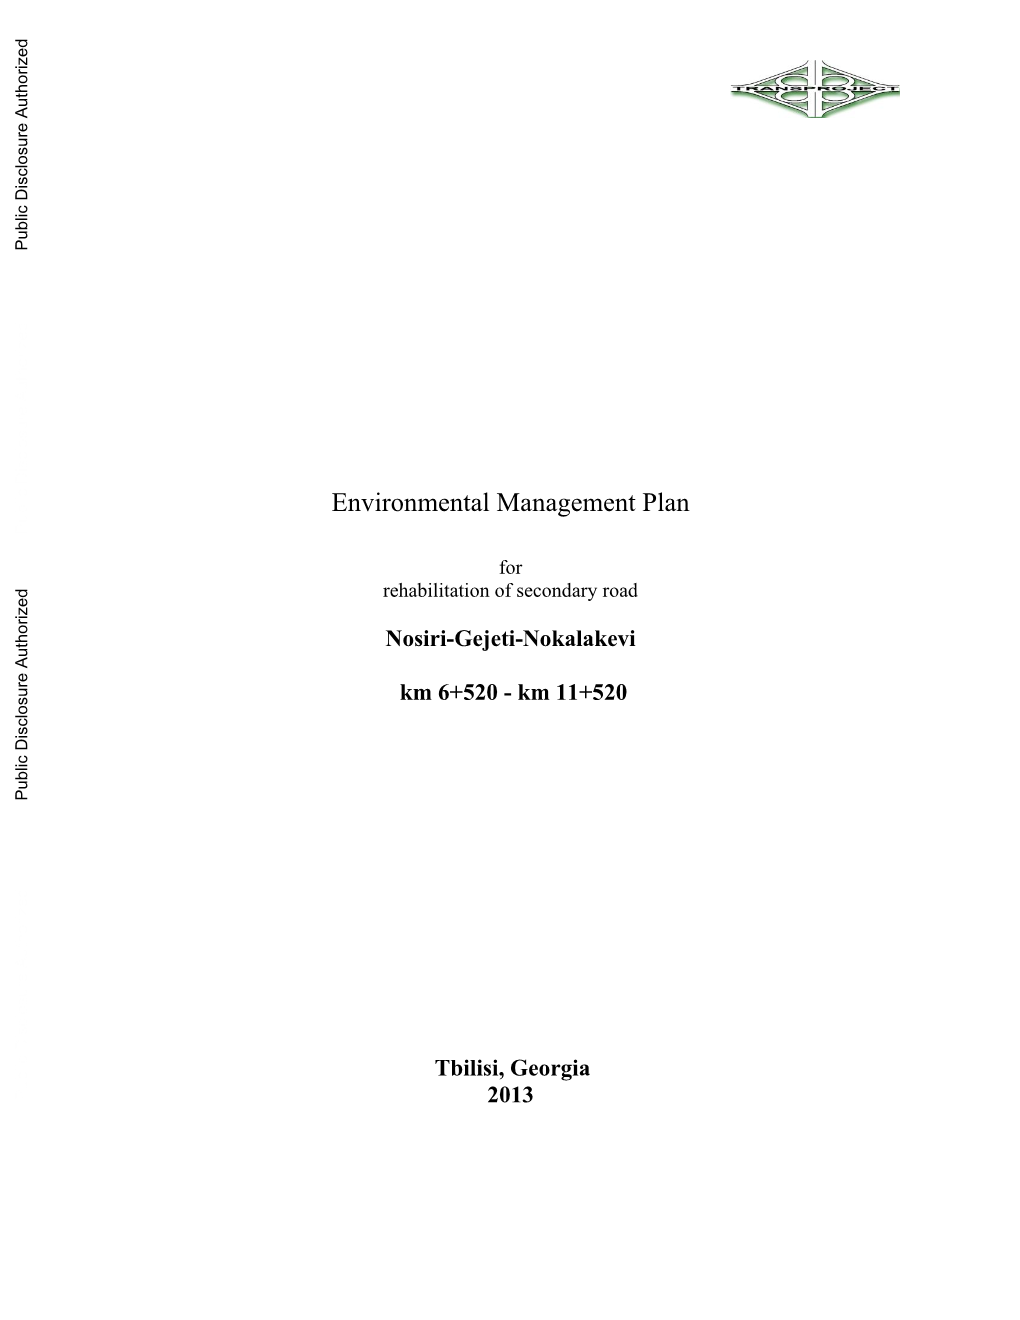 Environmental Management Plan Public Disclosure Authorized for Rehabilitation of Secondary Road